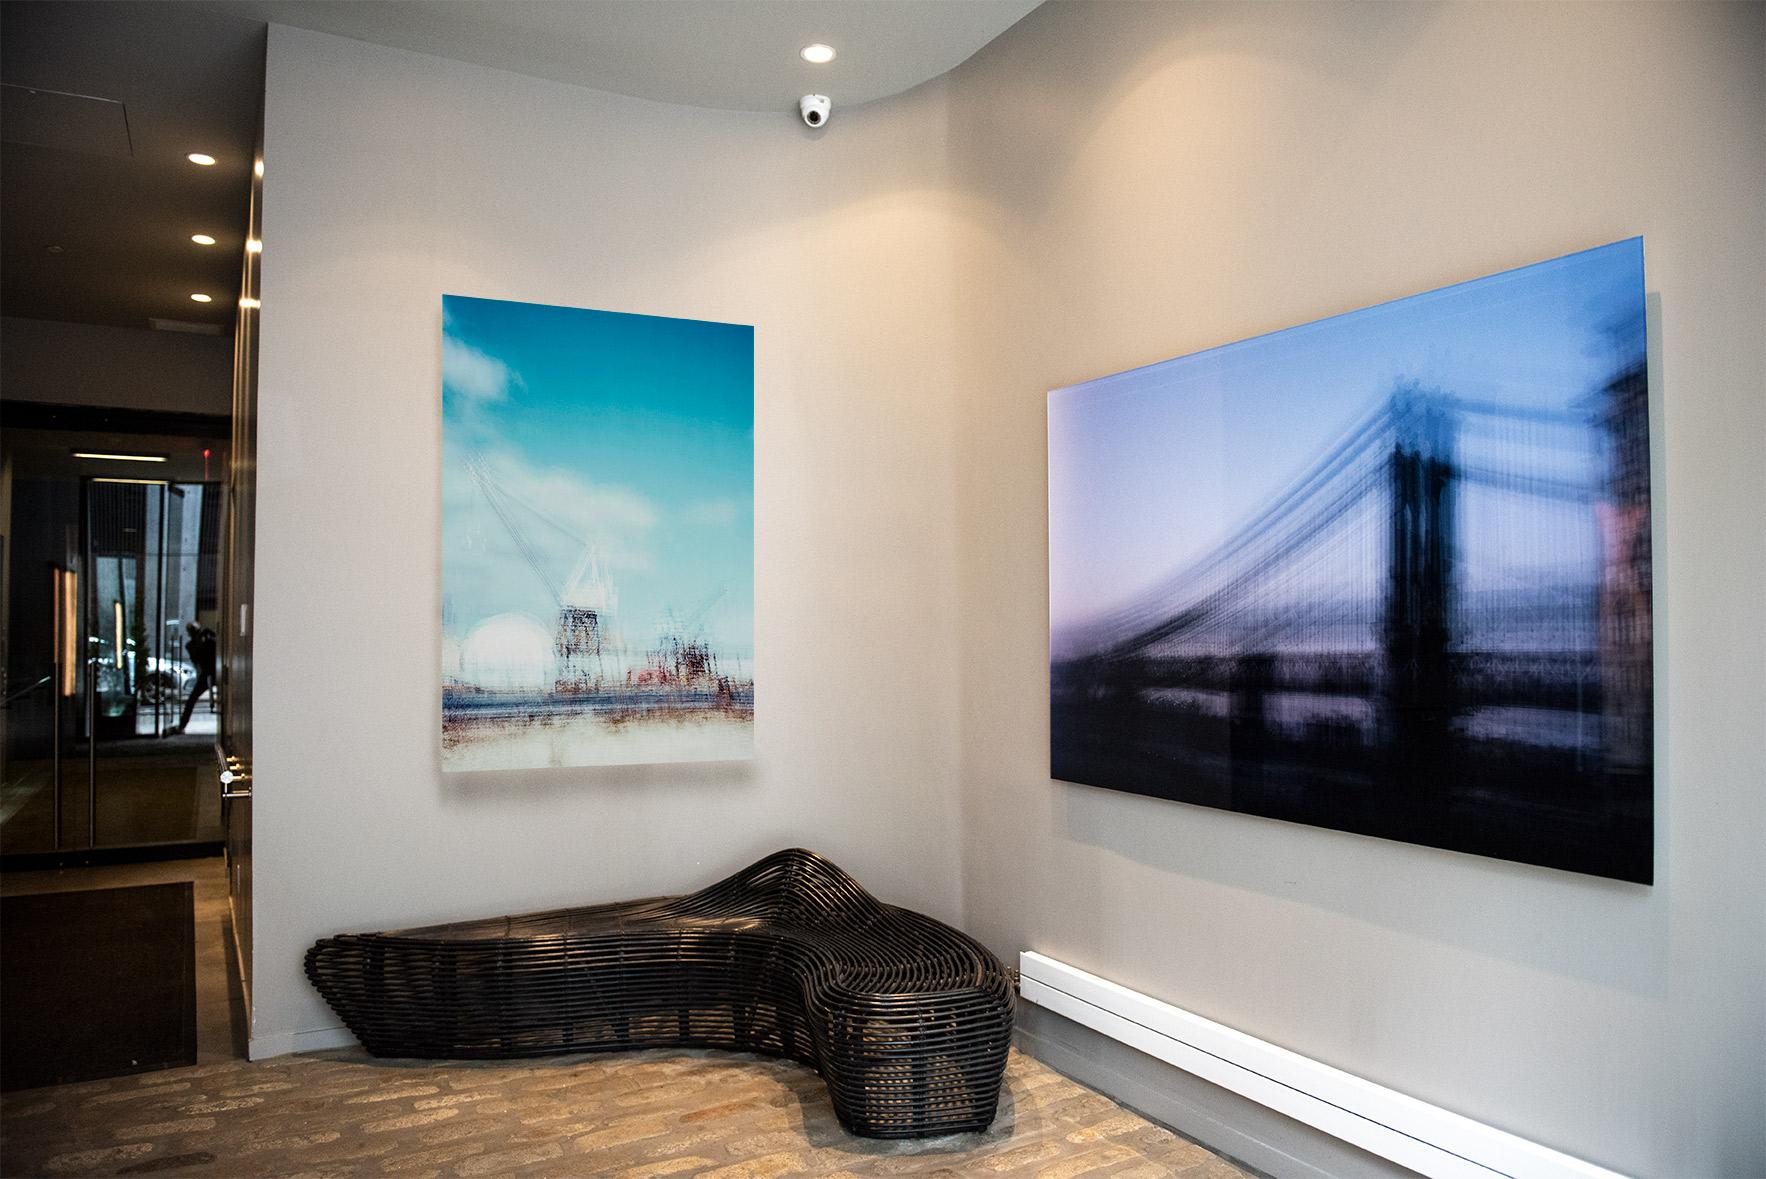 Artist: Poby
Title: Manhattan Bridge, New York
Year: 2012
Dimensions: 48